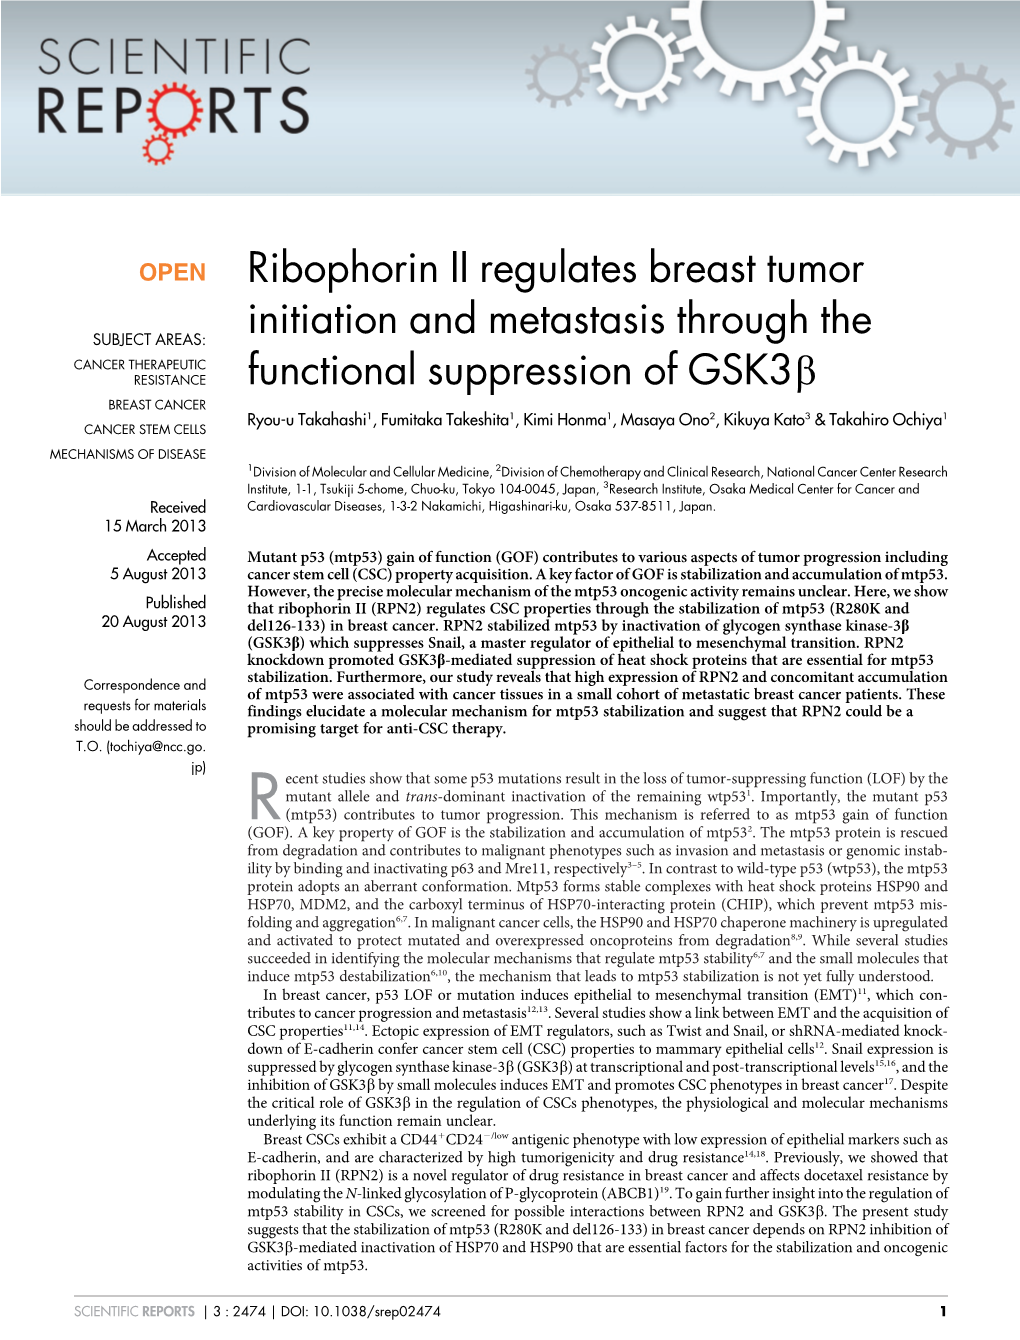 Ribophorin II Regulates Breast Tumor Initiation and Metastasis Through